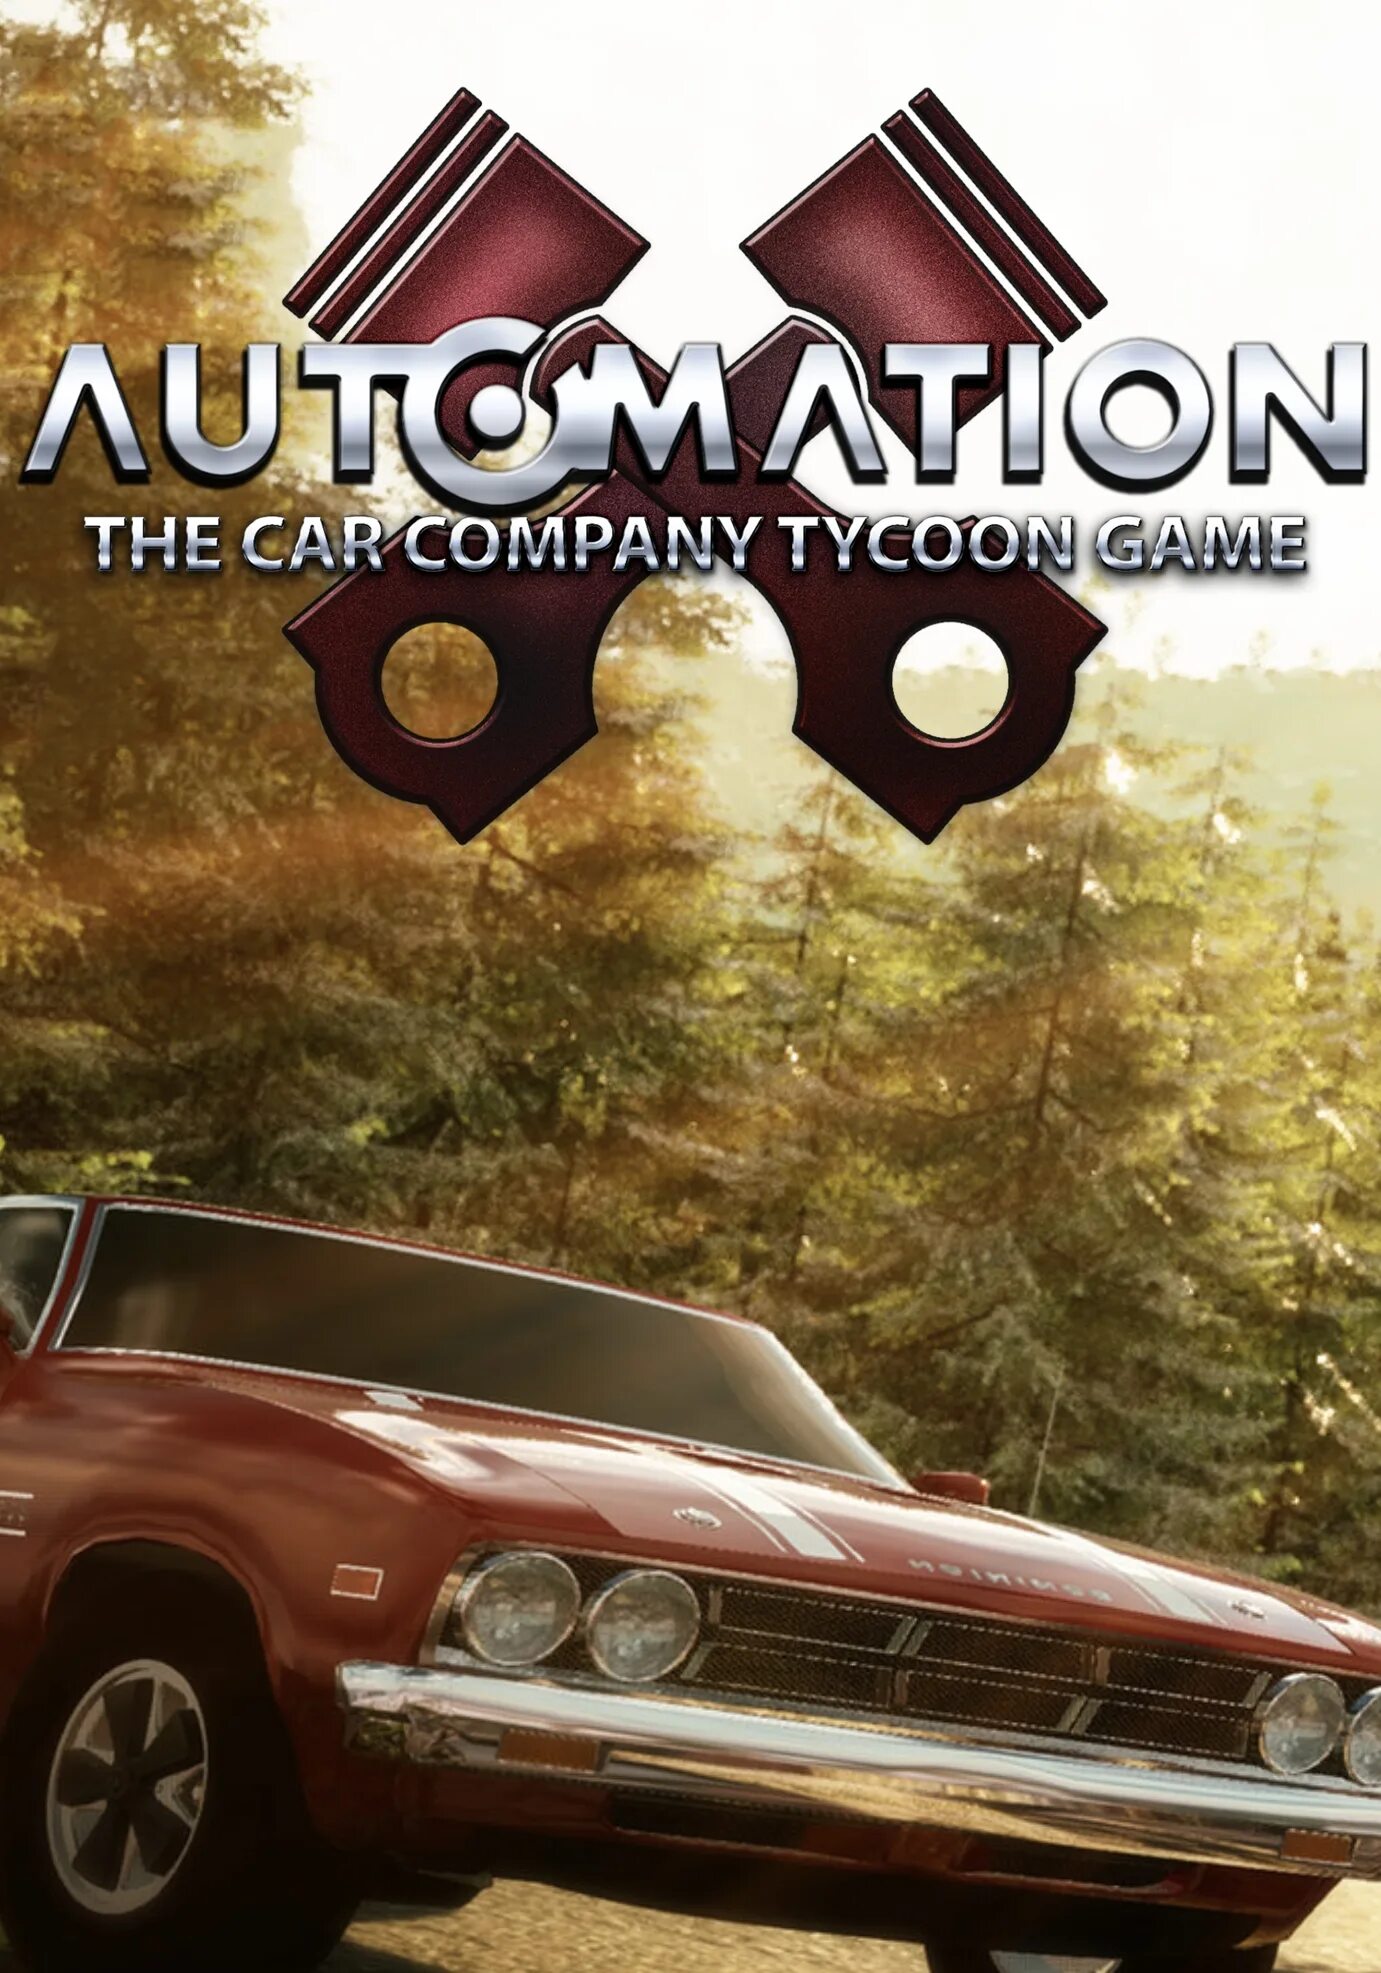 Car company tycoon бесплатные покупки. Car Company Tycoon. The car Company Tycoon game. Автомейшен. Automation car Company Tycoon cars.